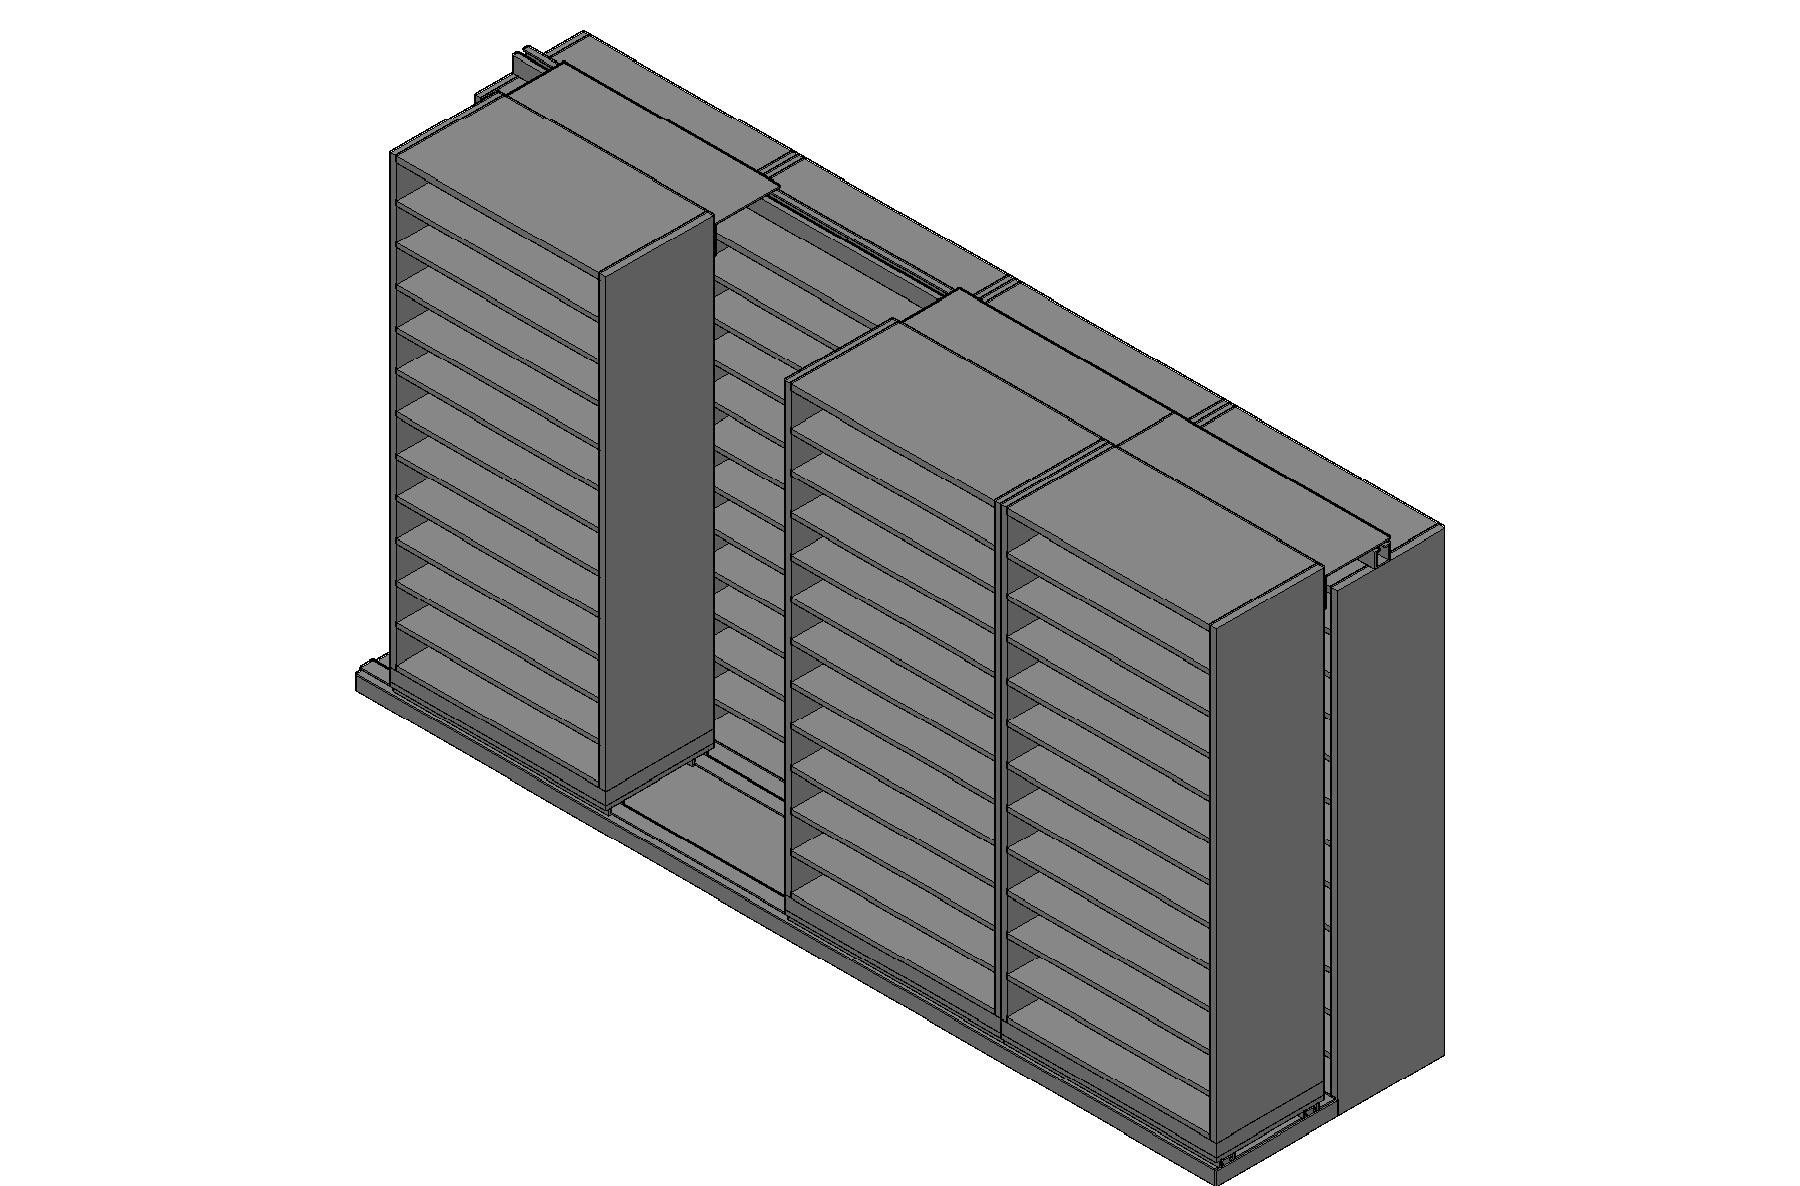 Bin Size Sliding Shelves - 2 Rows Deep - 12 Levels - (36" x 18" Shelves) - 148" Total Width